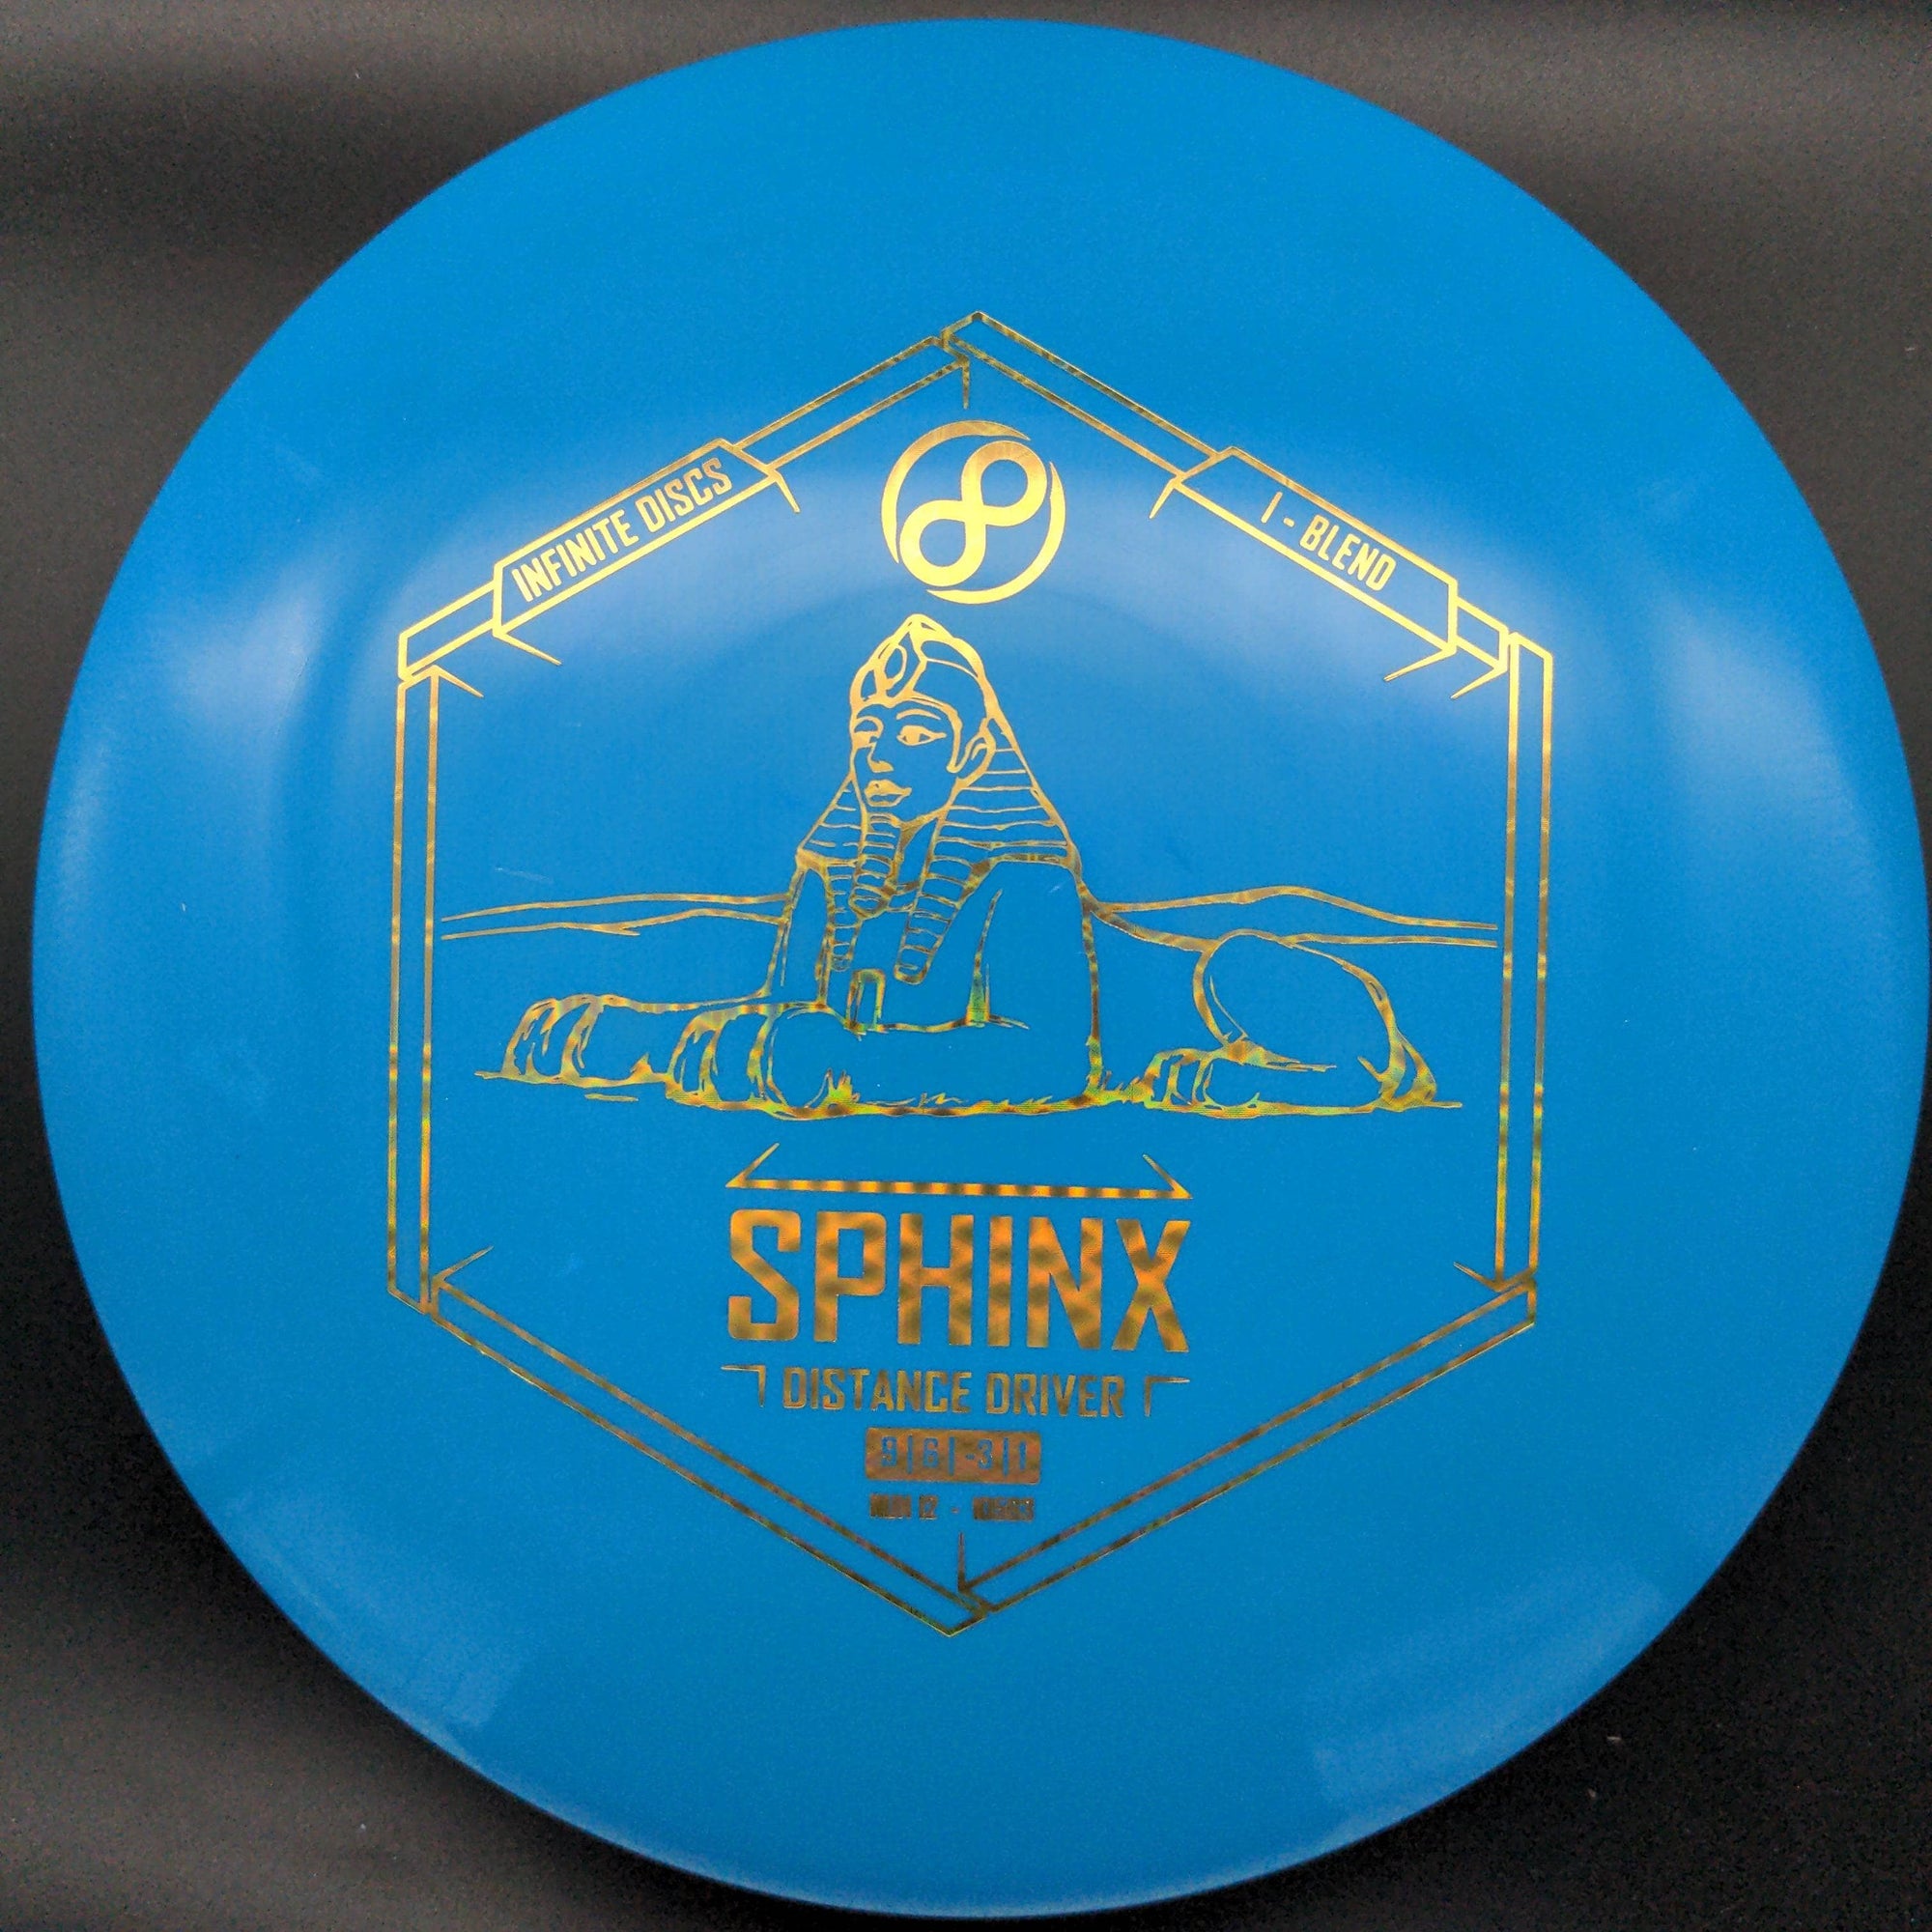 Infinite Discs Distance Driver Blue Gold Hexagon Stamp 175g Sphinx, I - Blend